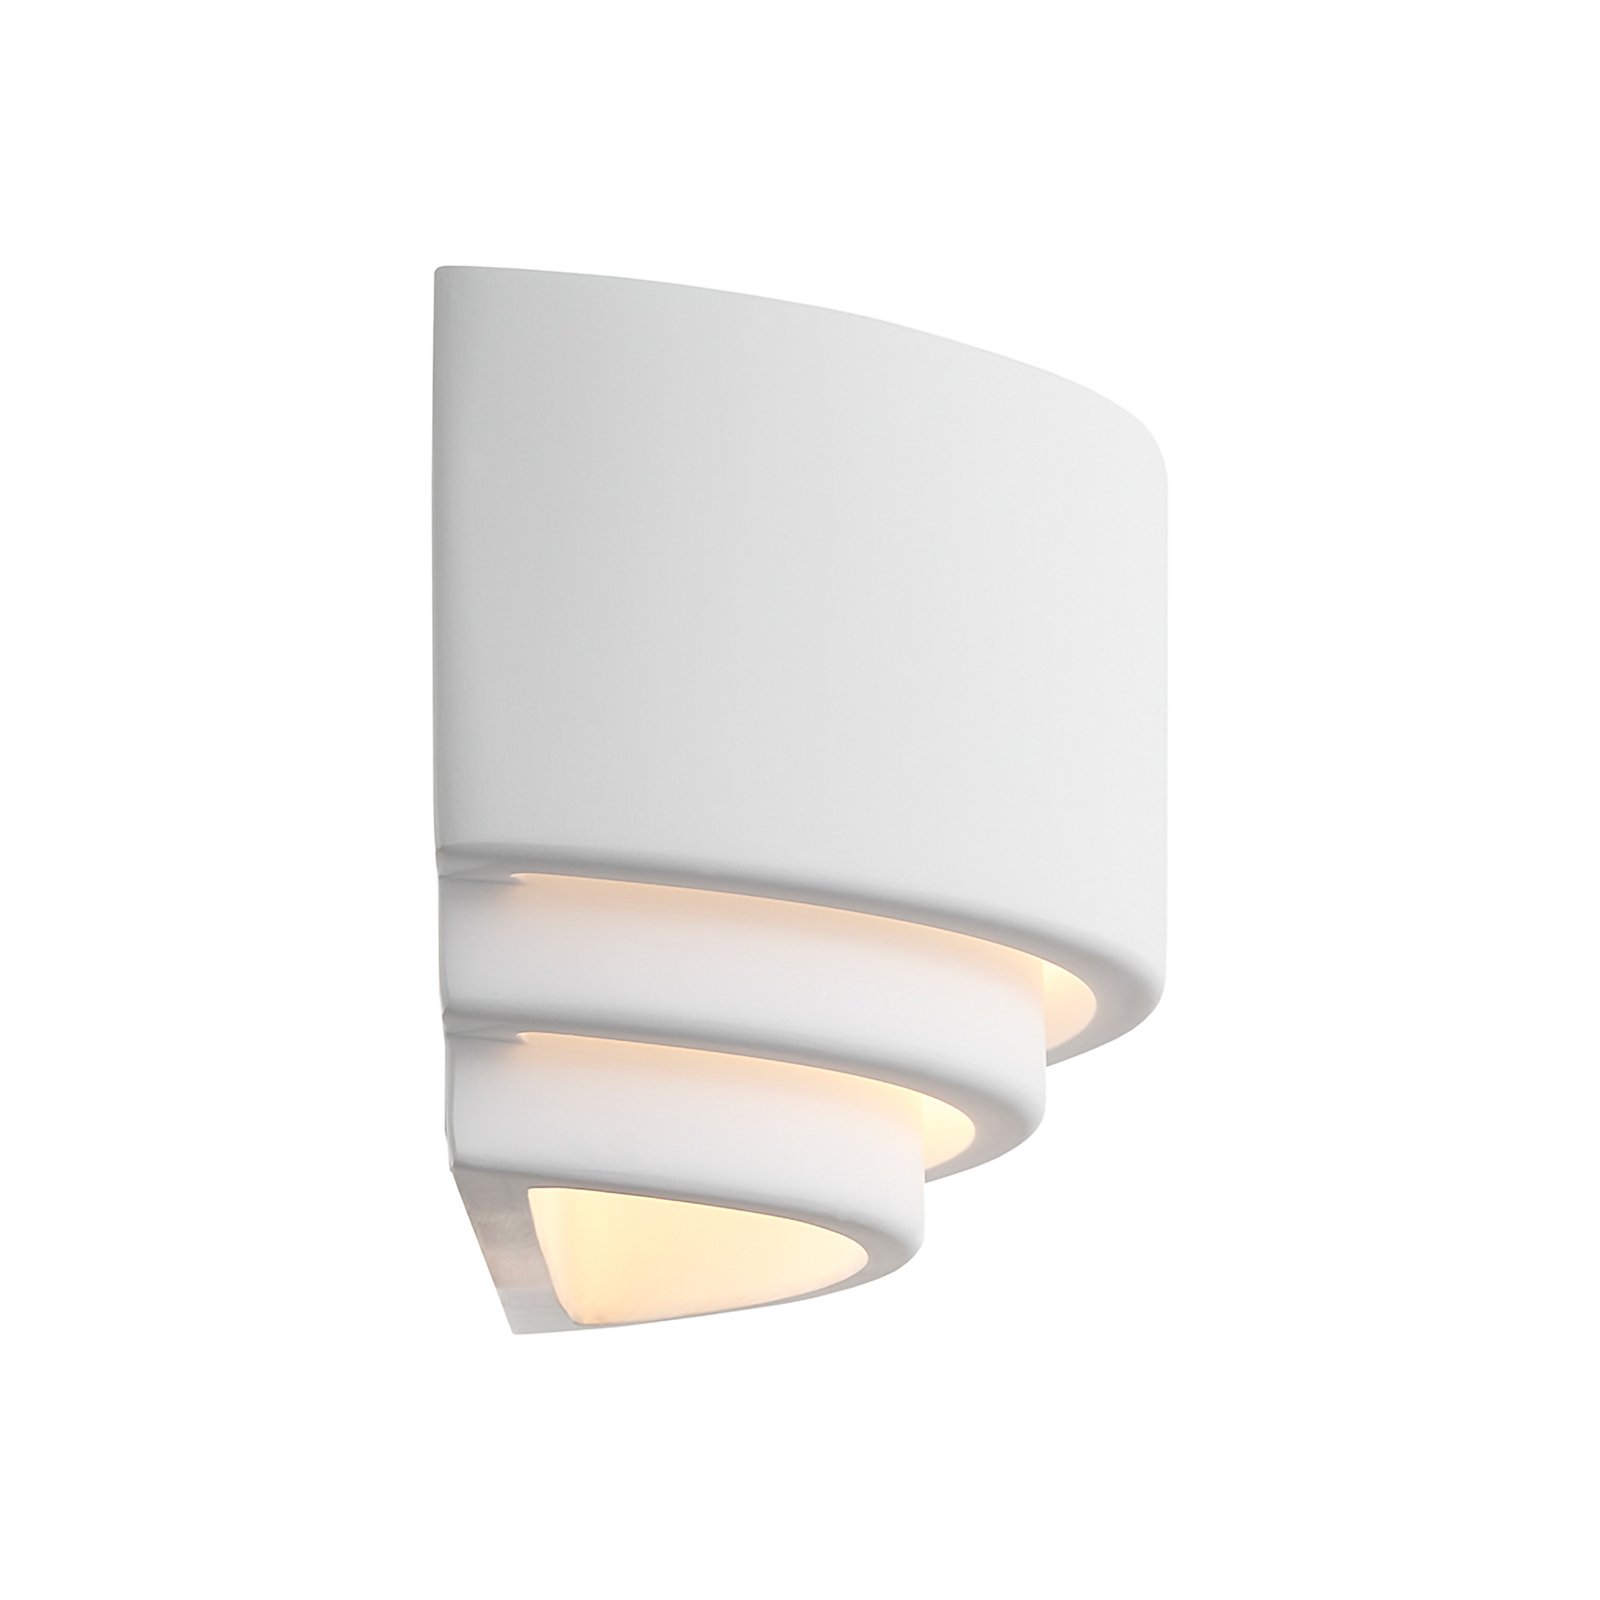 Lancio Langwerpige wandlamp van gips, met stekker, wit